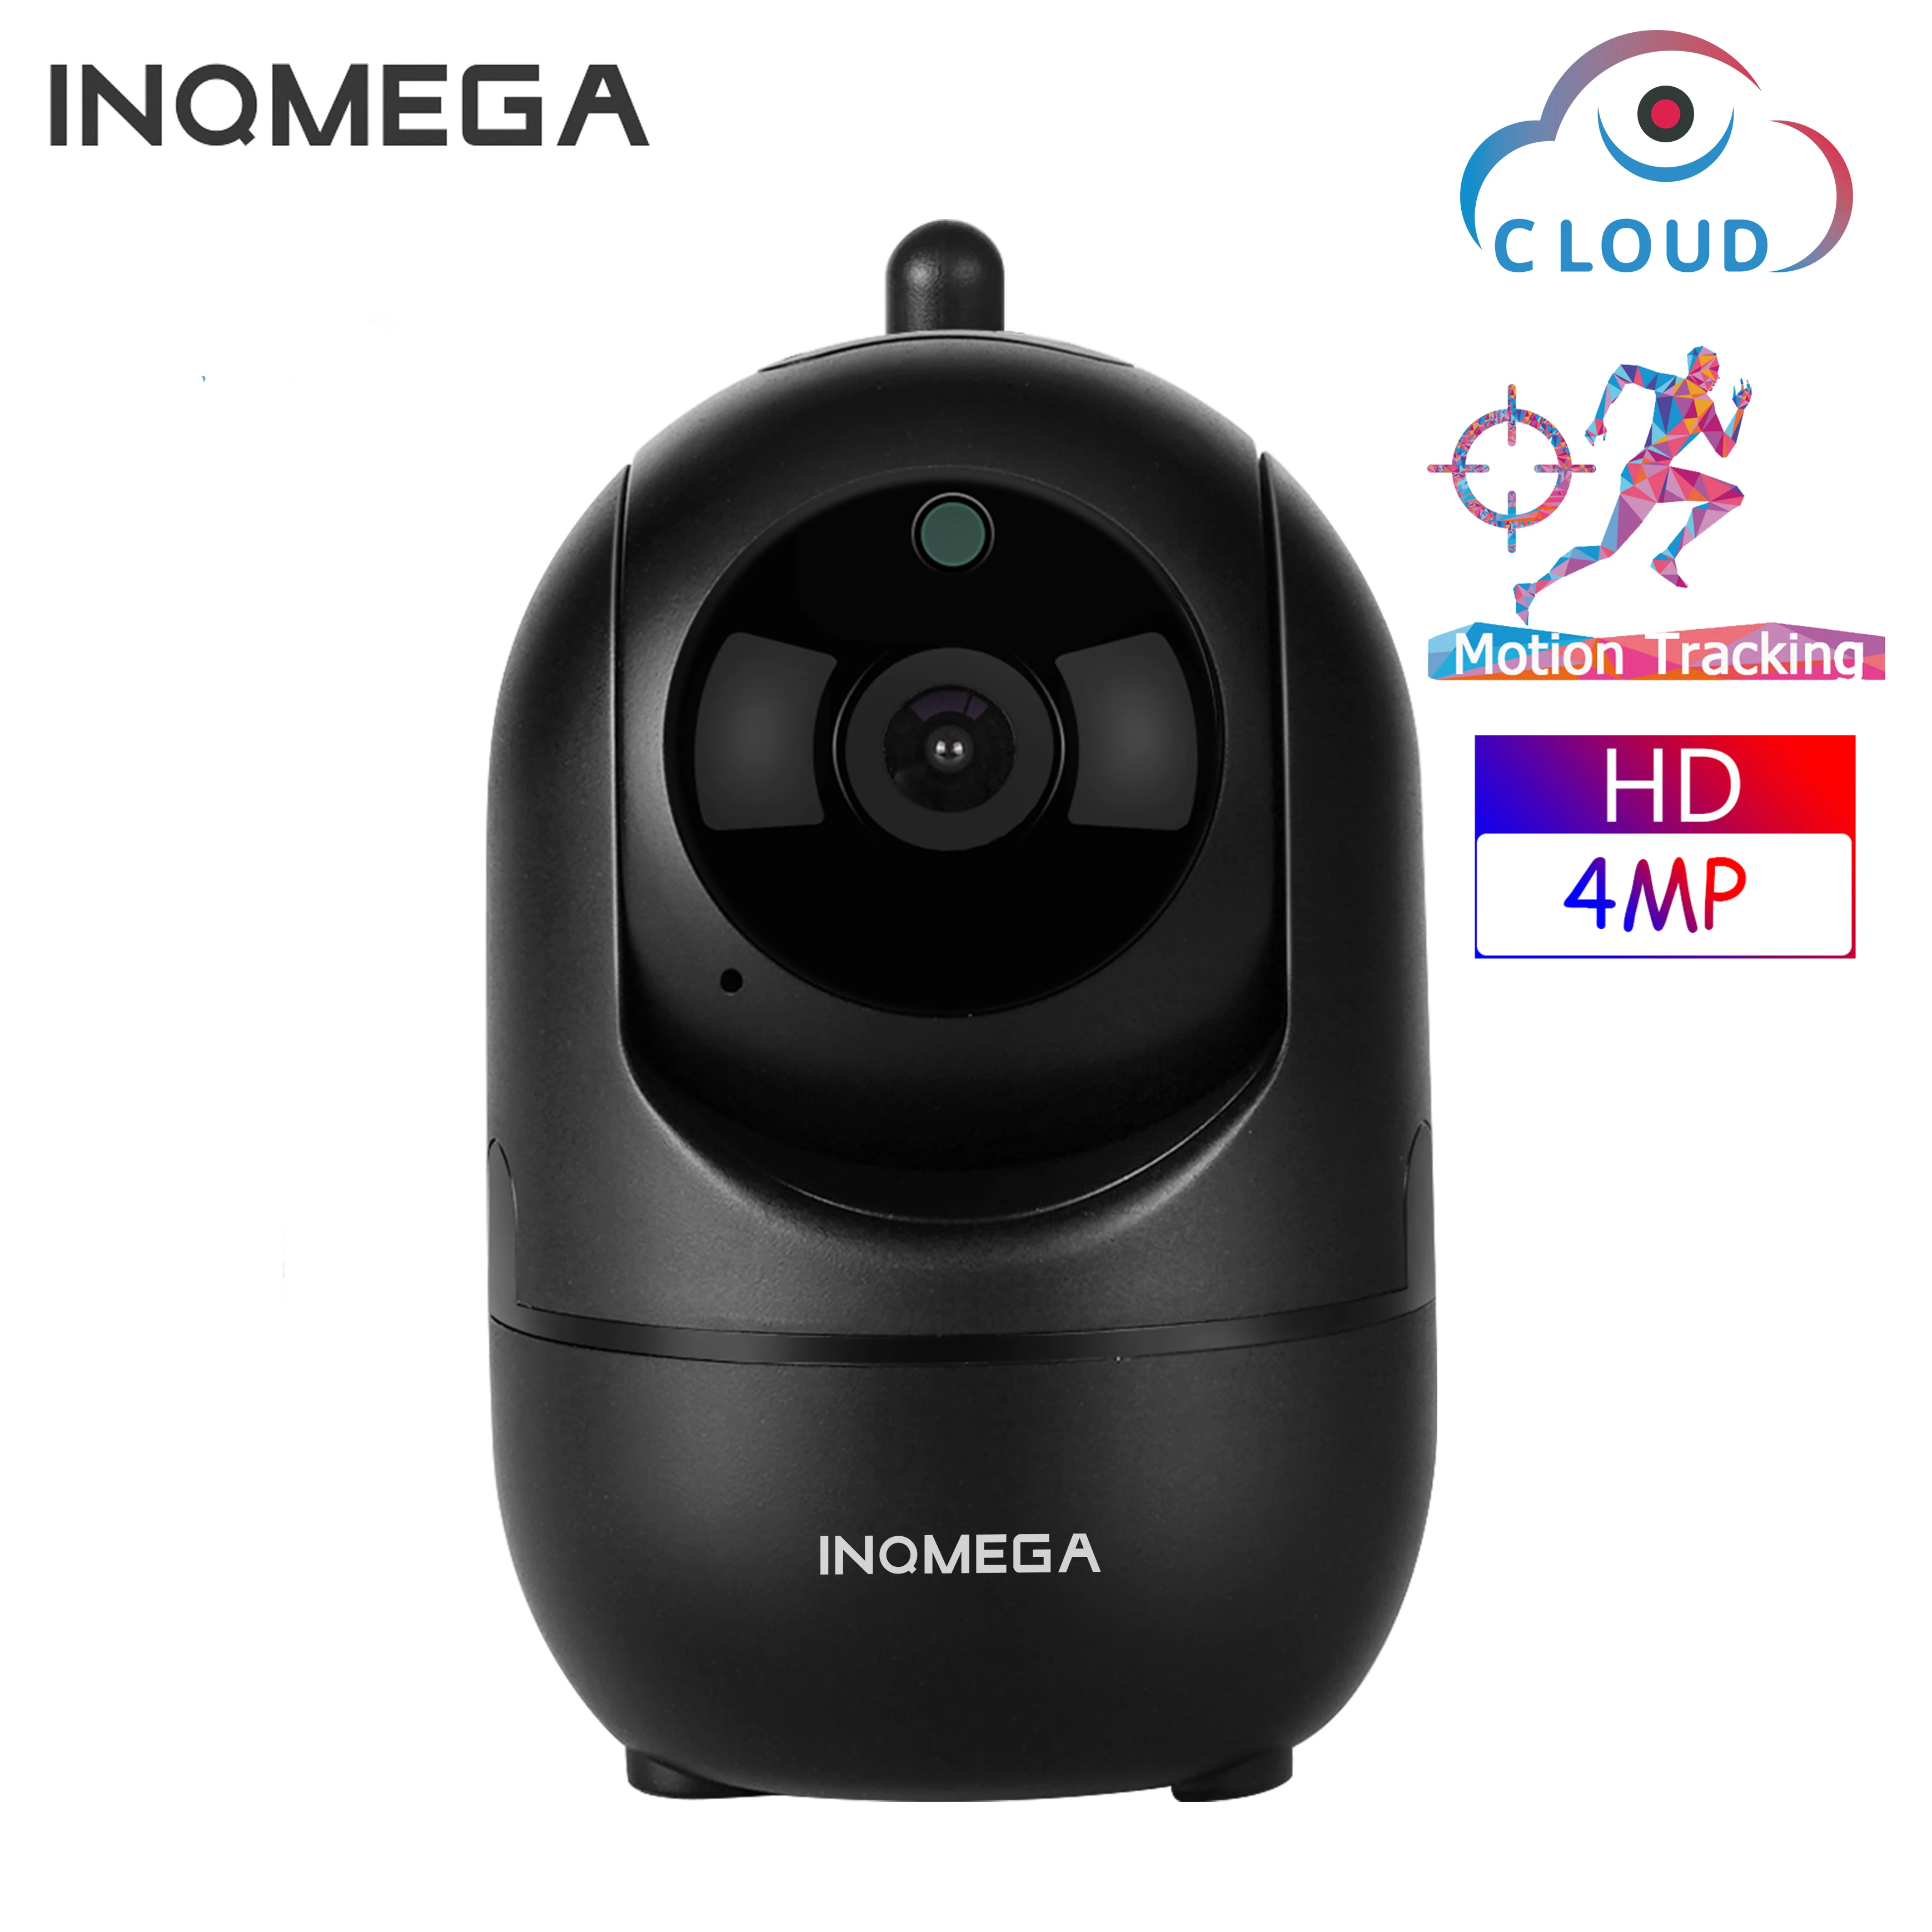 

INQMEGA HD 4MP Cloud Wireless IP Camera Intelligent Auto Tracking Of Human Home Security Surveillance CCTV Network Wifi Camera